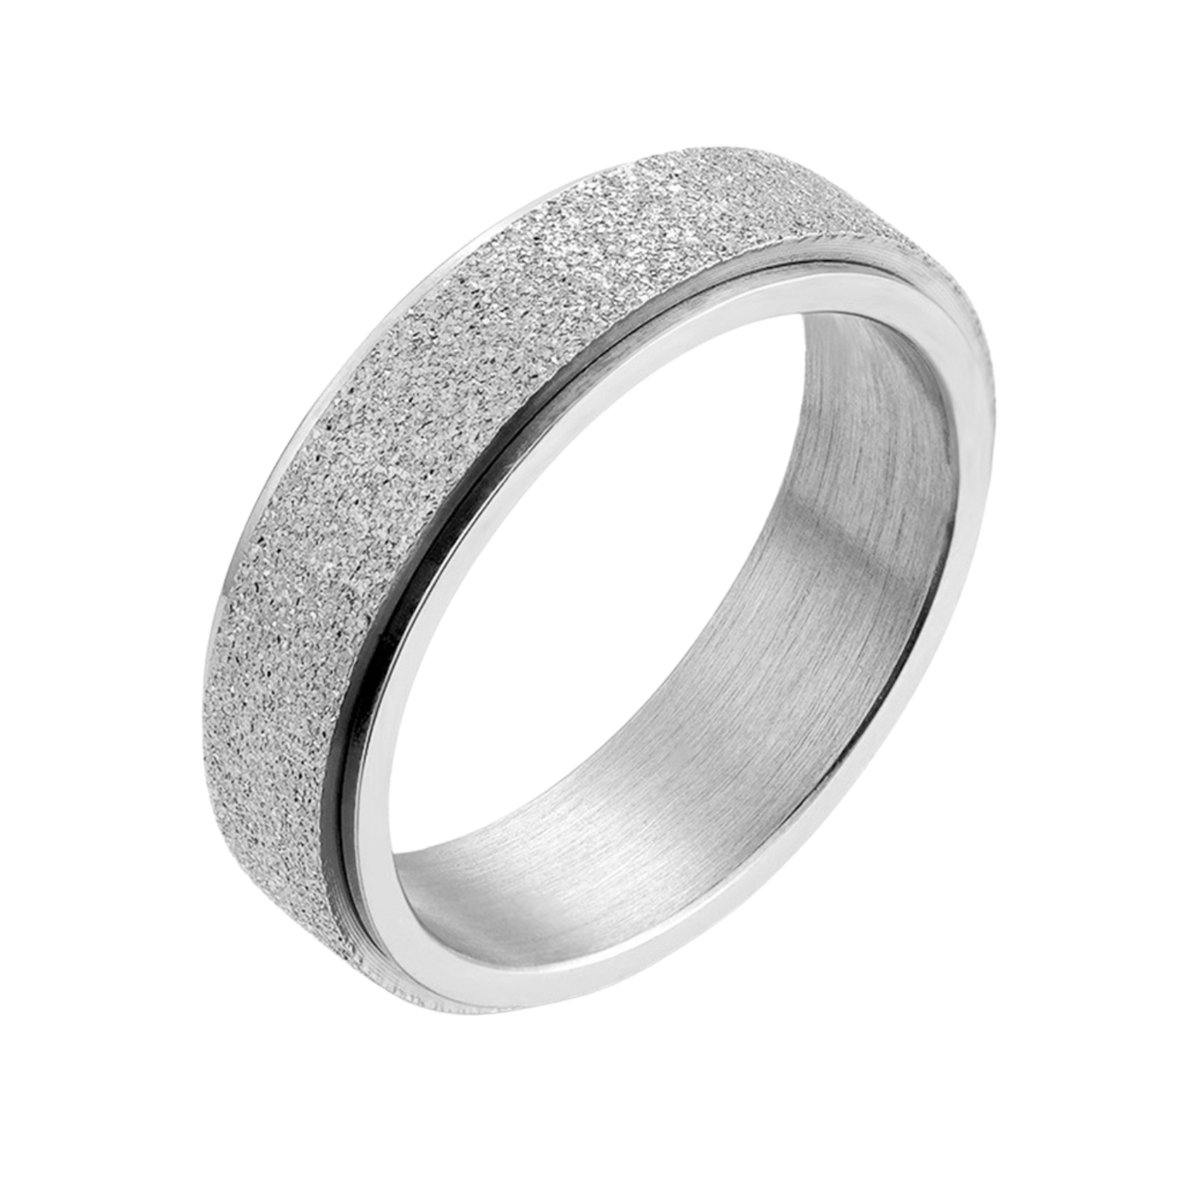 Despora - Anxiety Ring - (Glitter) - Stress Ring - Fidget Ring - Draaibare Ring - Spinning Ring - Spinner Ring - Zilver - (16.75 mm / maat 53)